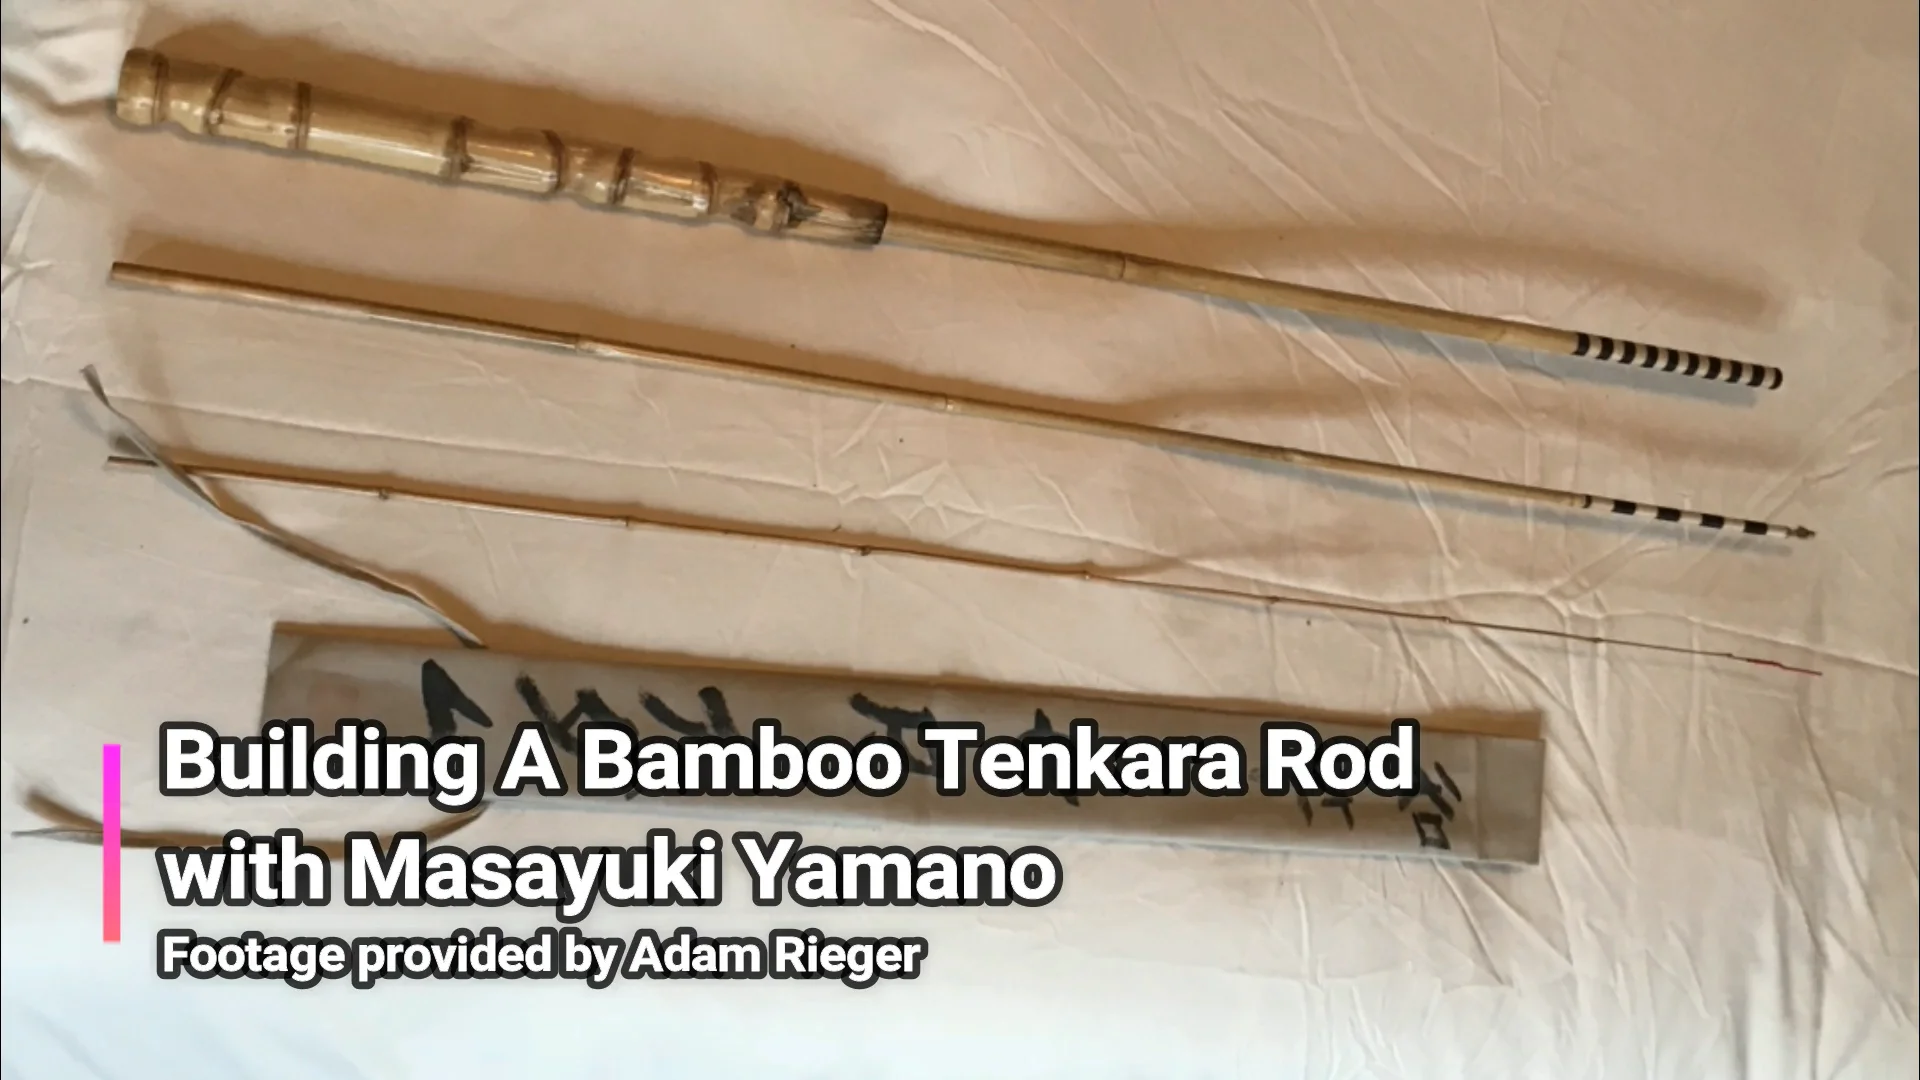 Wazao and Bamboo Tenkara rods - Rods - 10 Colors Tenkara